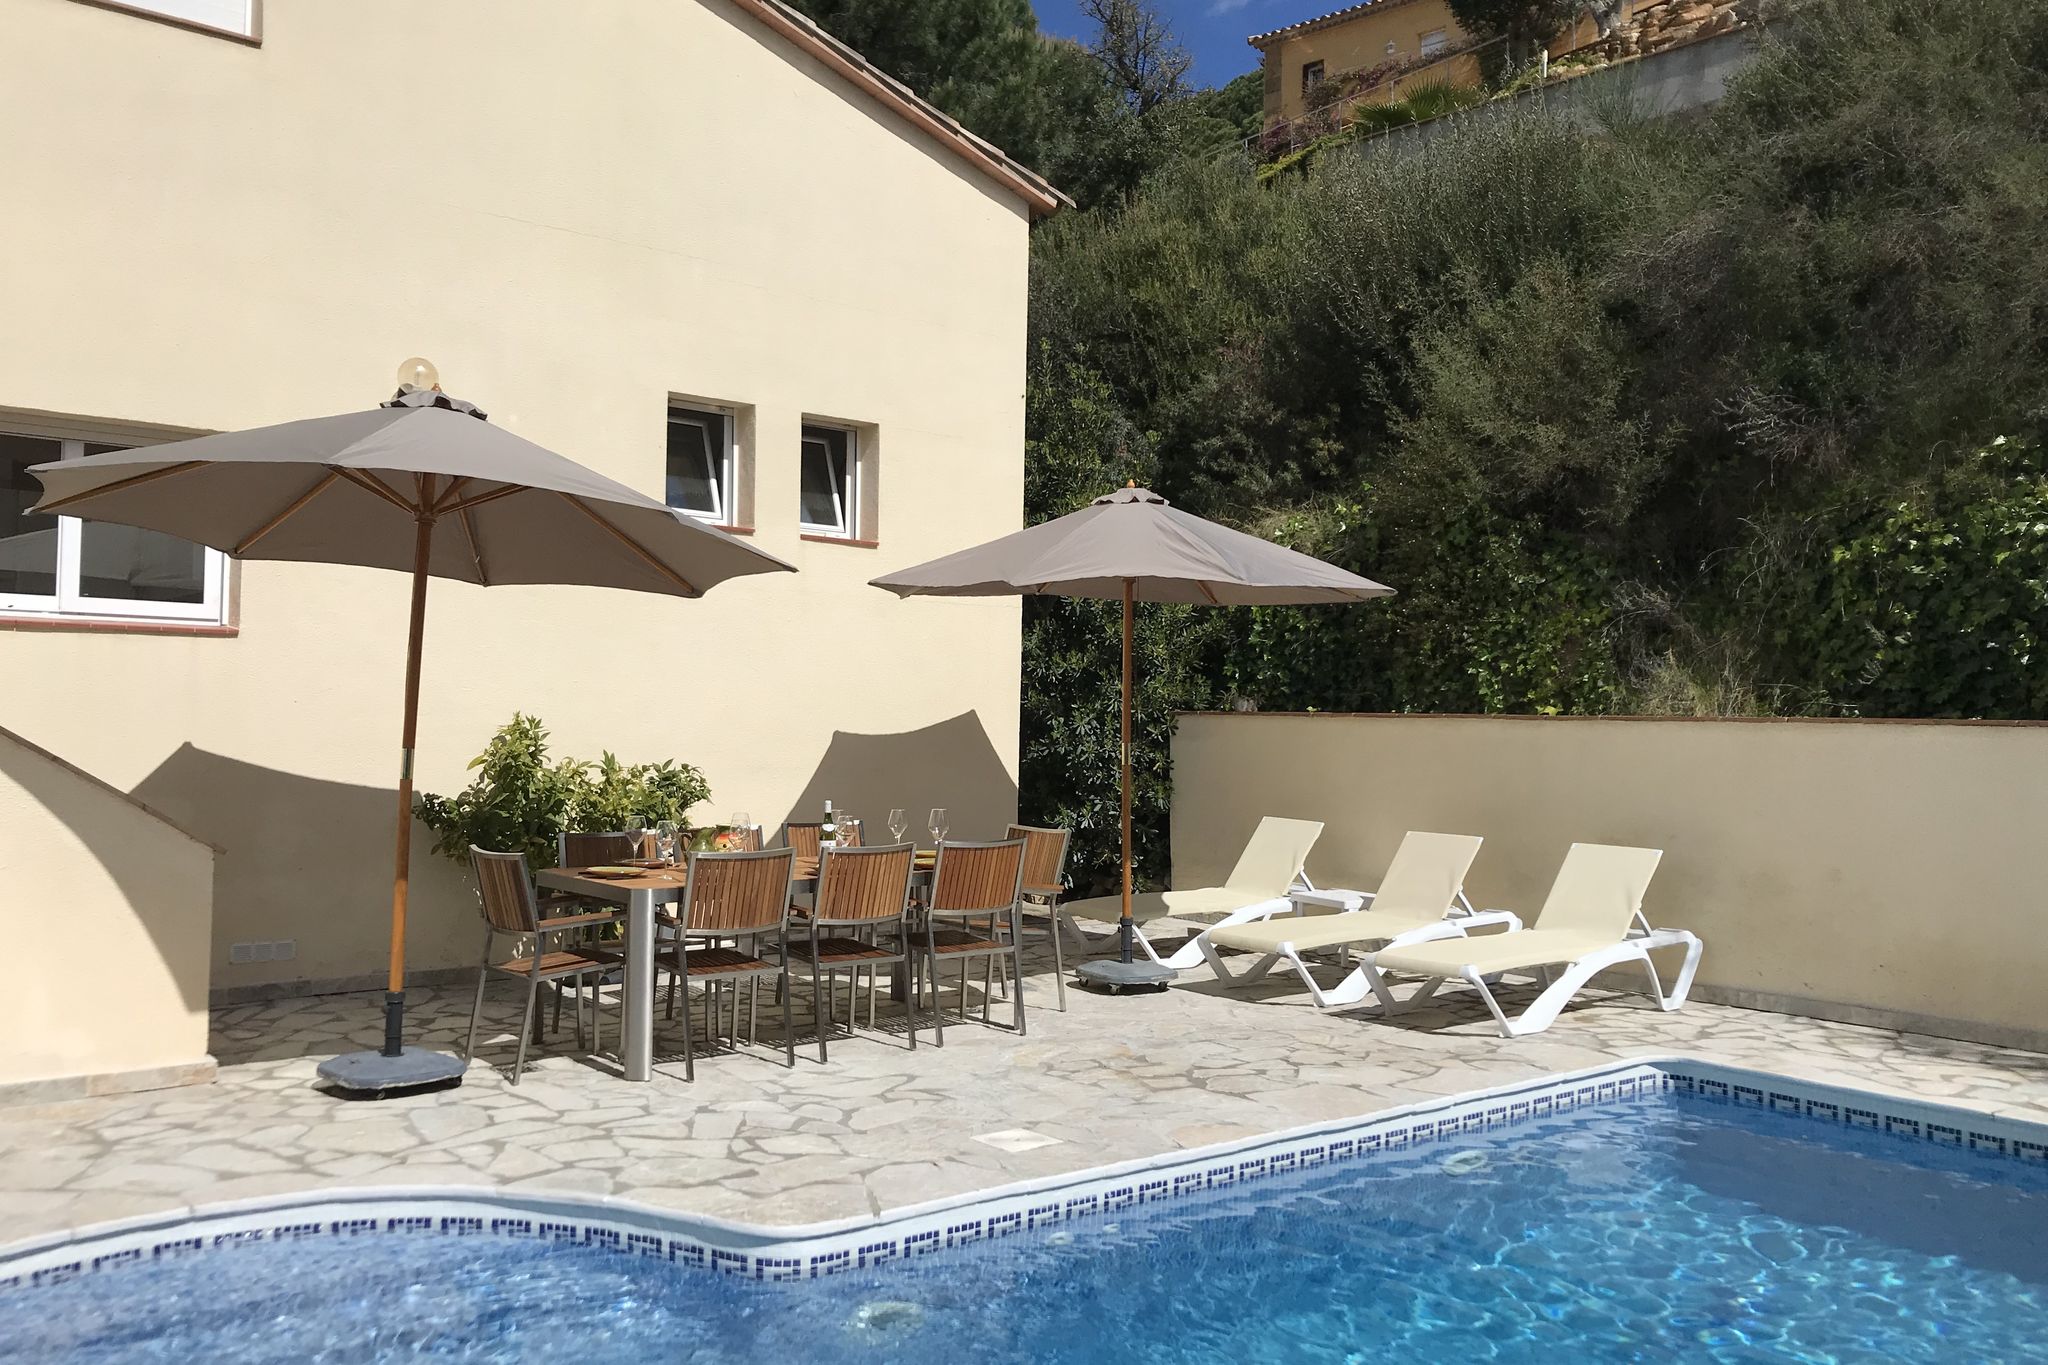 Splendid Villa in Santa Cristina d'Aro with Swimming Pool